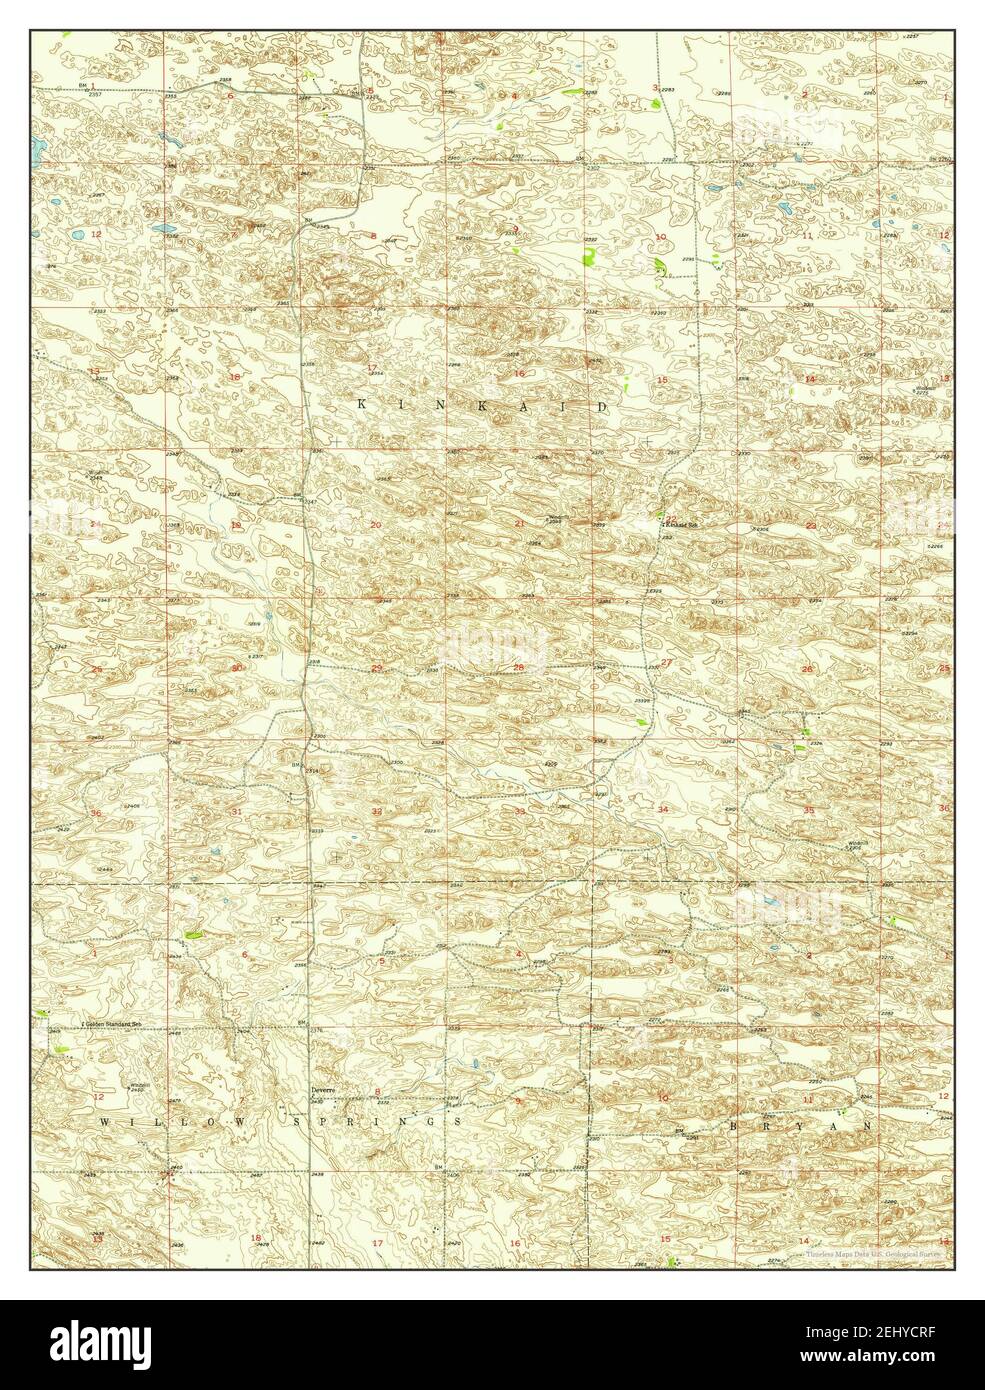 Burwell NE, Nebraska, map 1952, 1:24000, United States of America by Timeless Maps, data U.S. Geological Survey Stock Photo